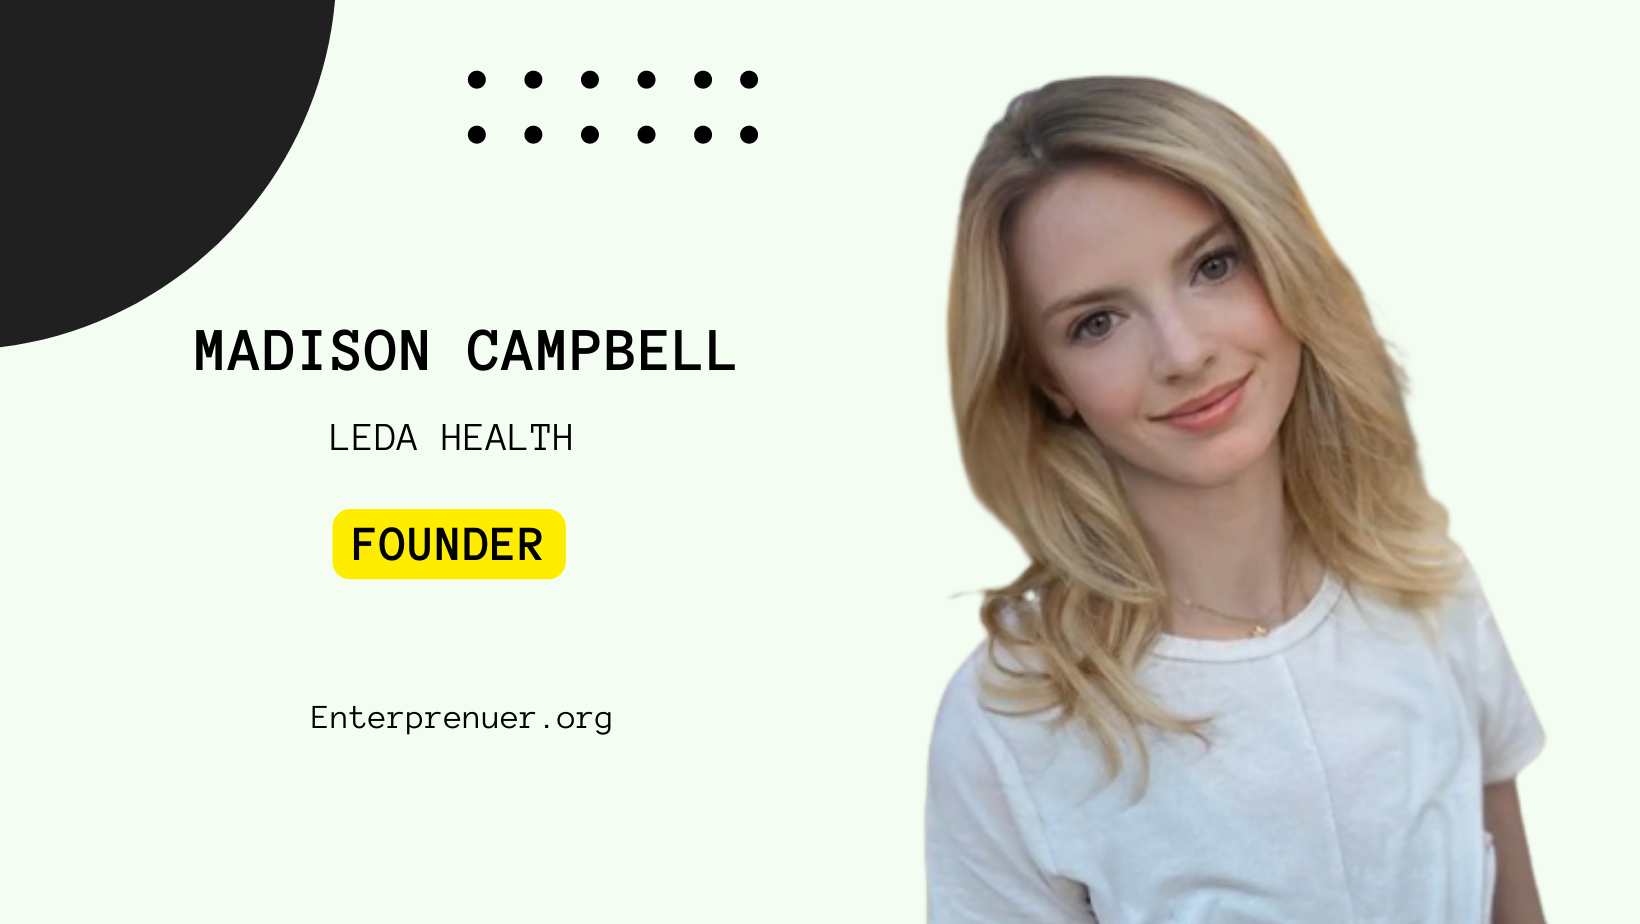 Madison Campbell Co-Founder of Leda Health